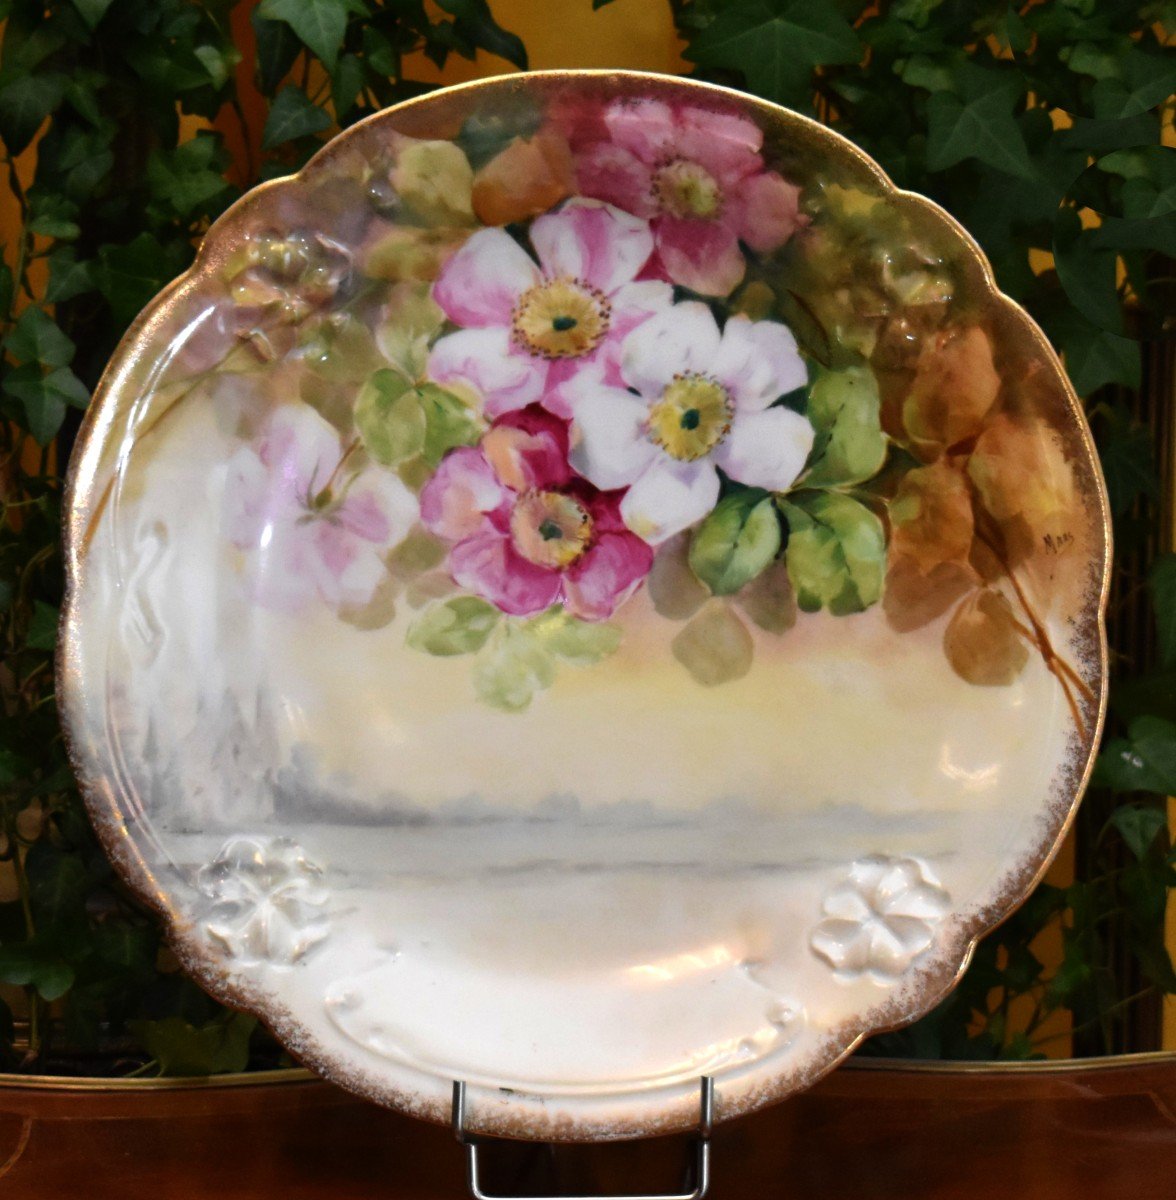 Large Limoges Porcelain Dish, Bernardaud, Landscape And Flower Decor, Hand Painted.